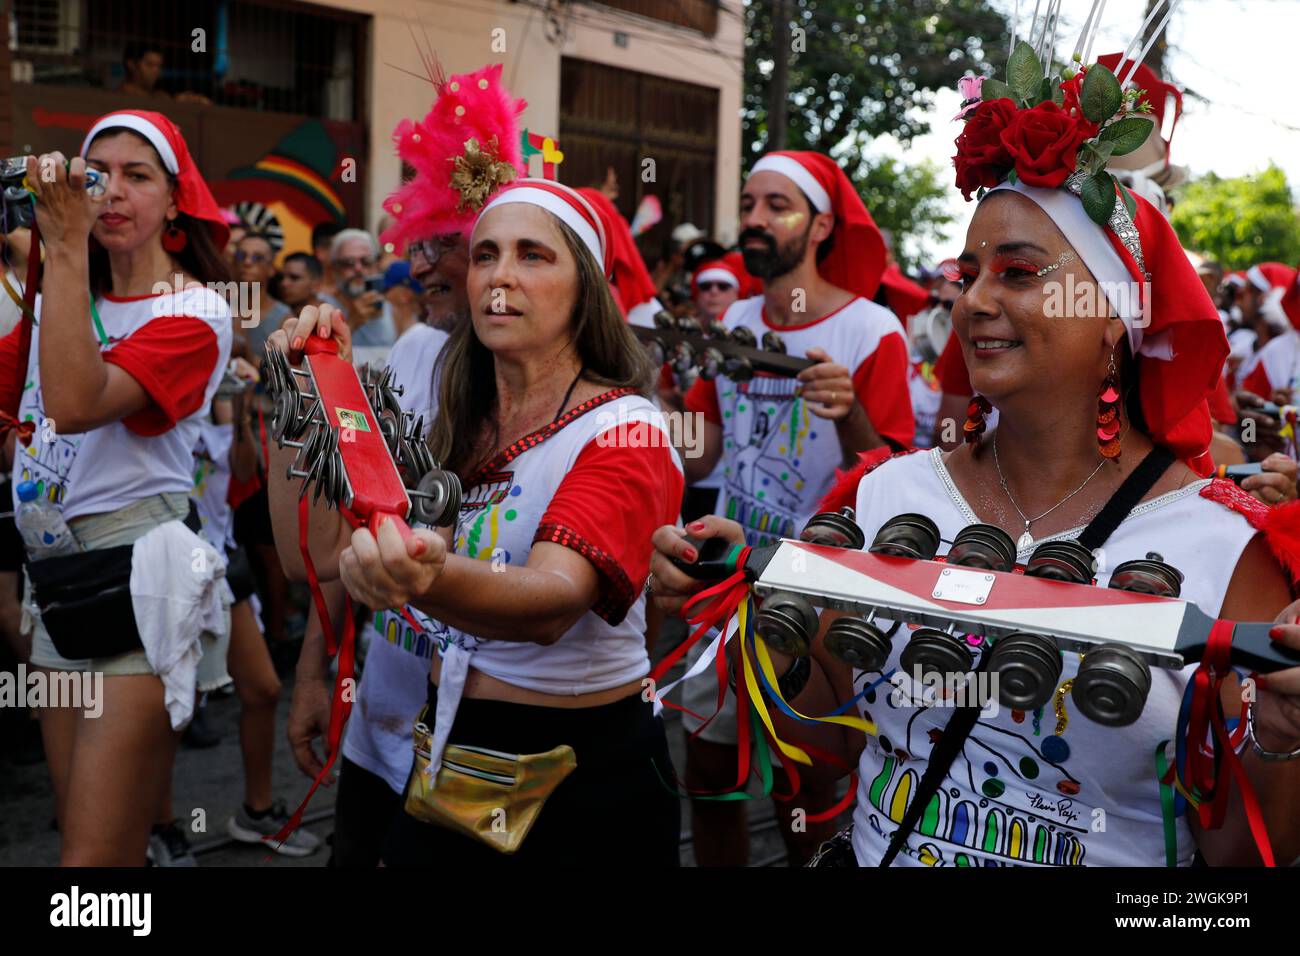 Street Carnival: Top 10 Blocos de Rua in Rio de Janeiro